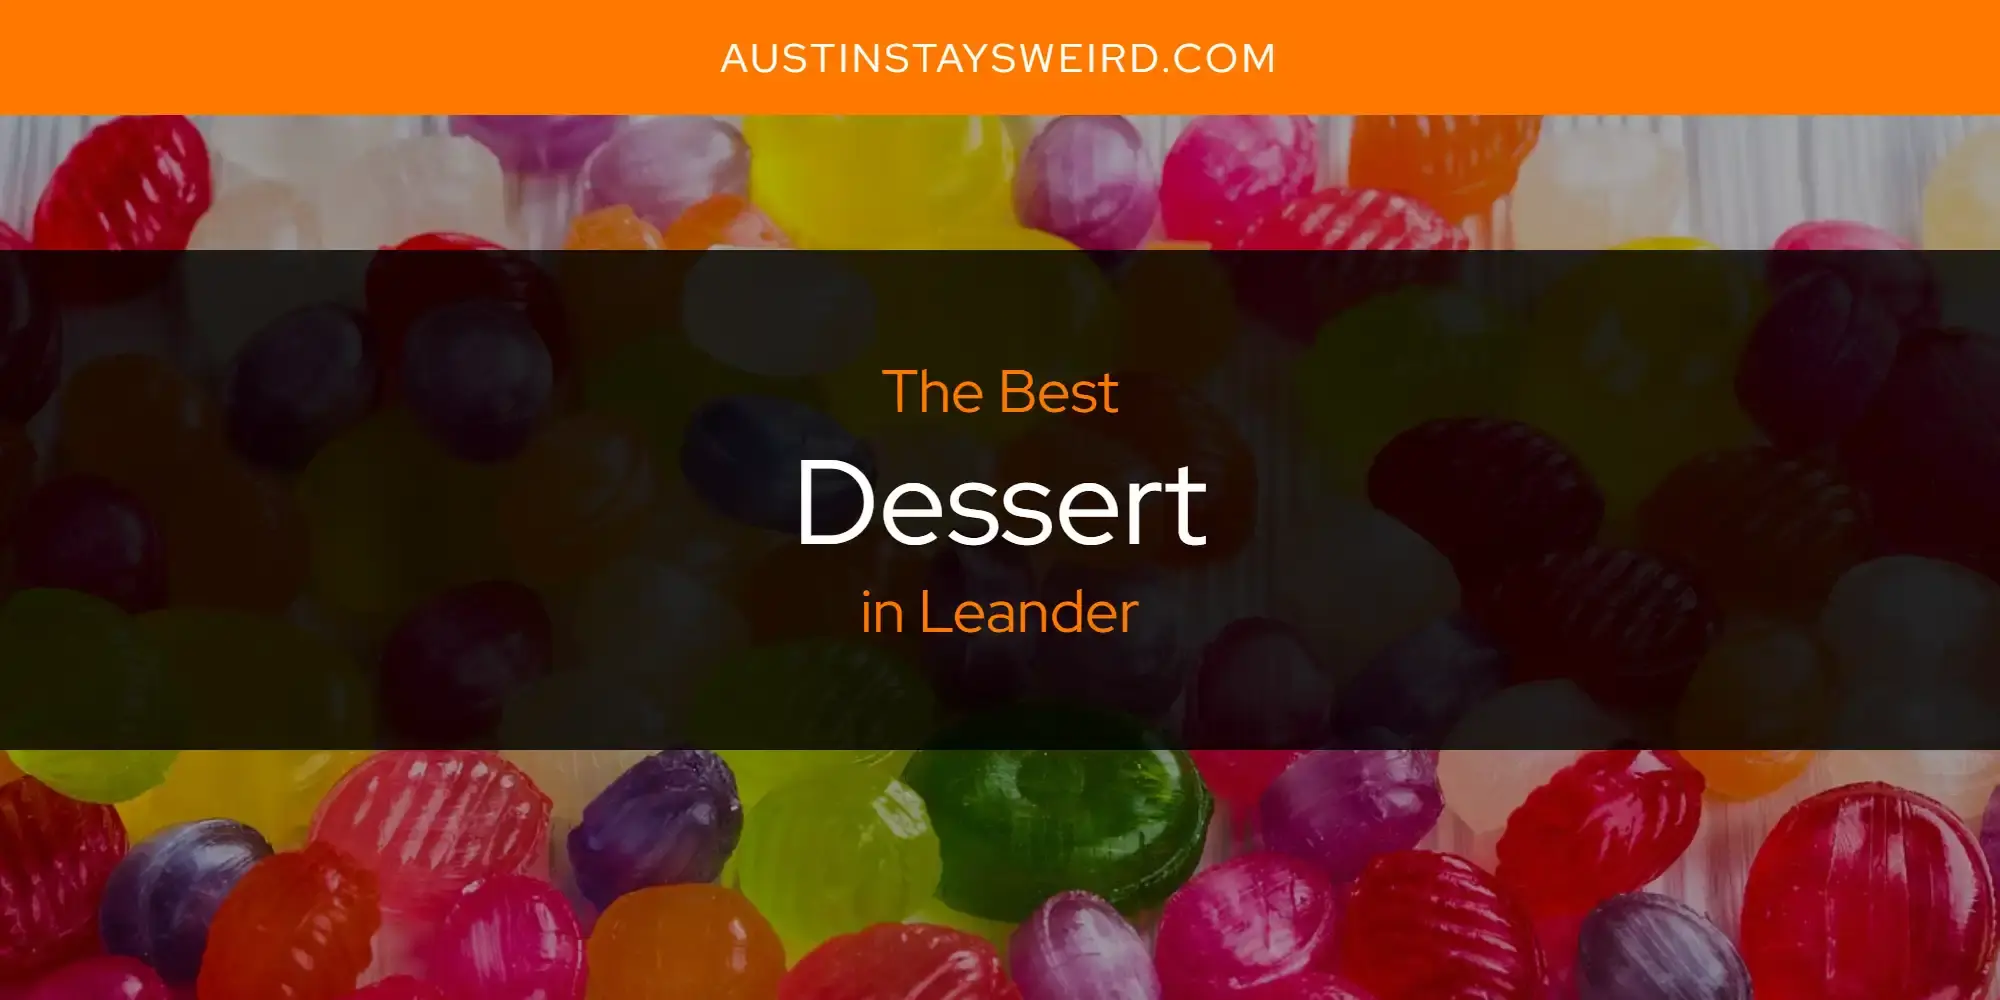 Best Dessert in Leander? Here's the Top 8